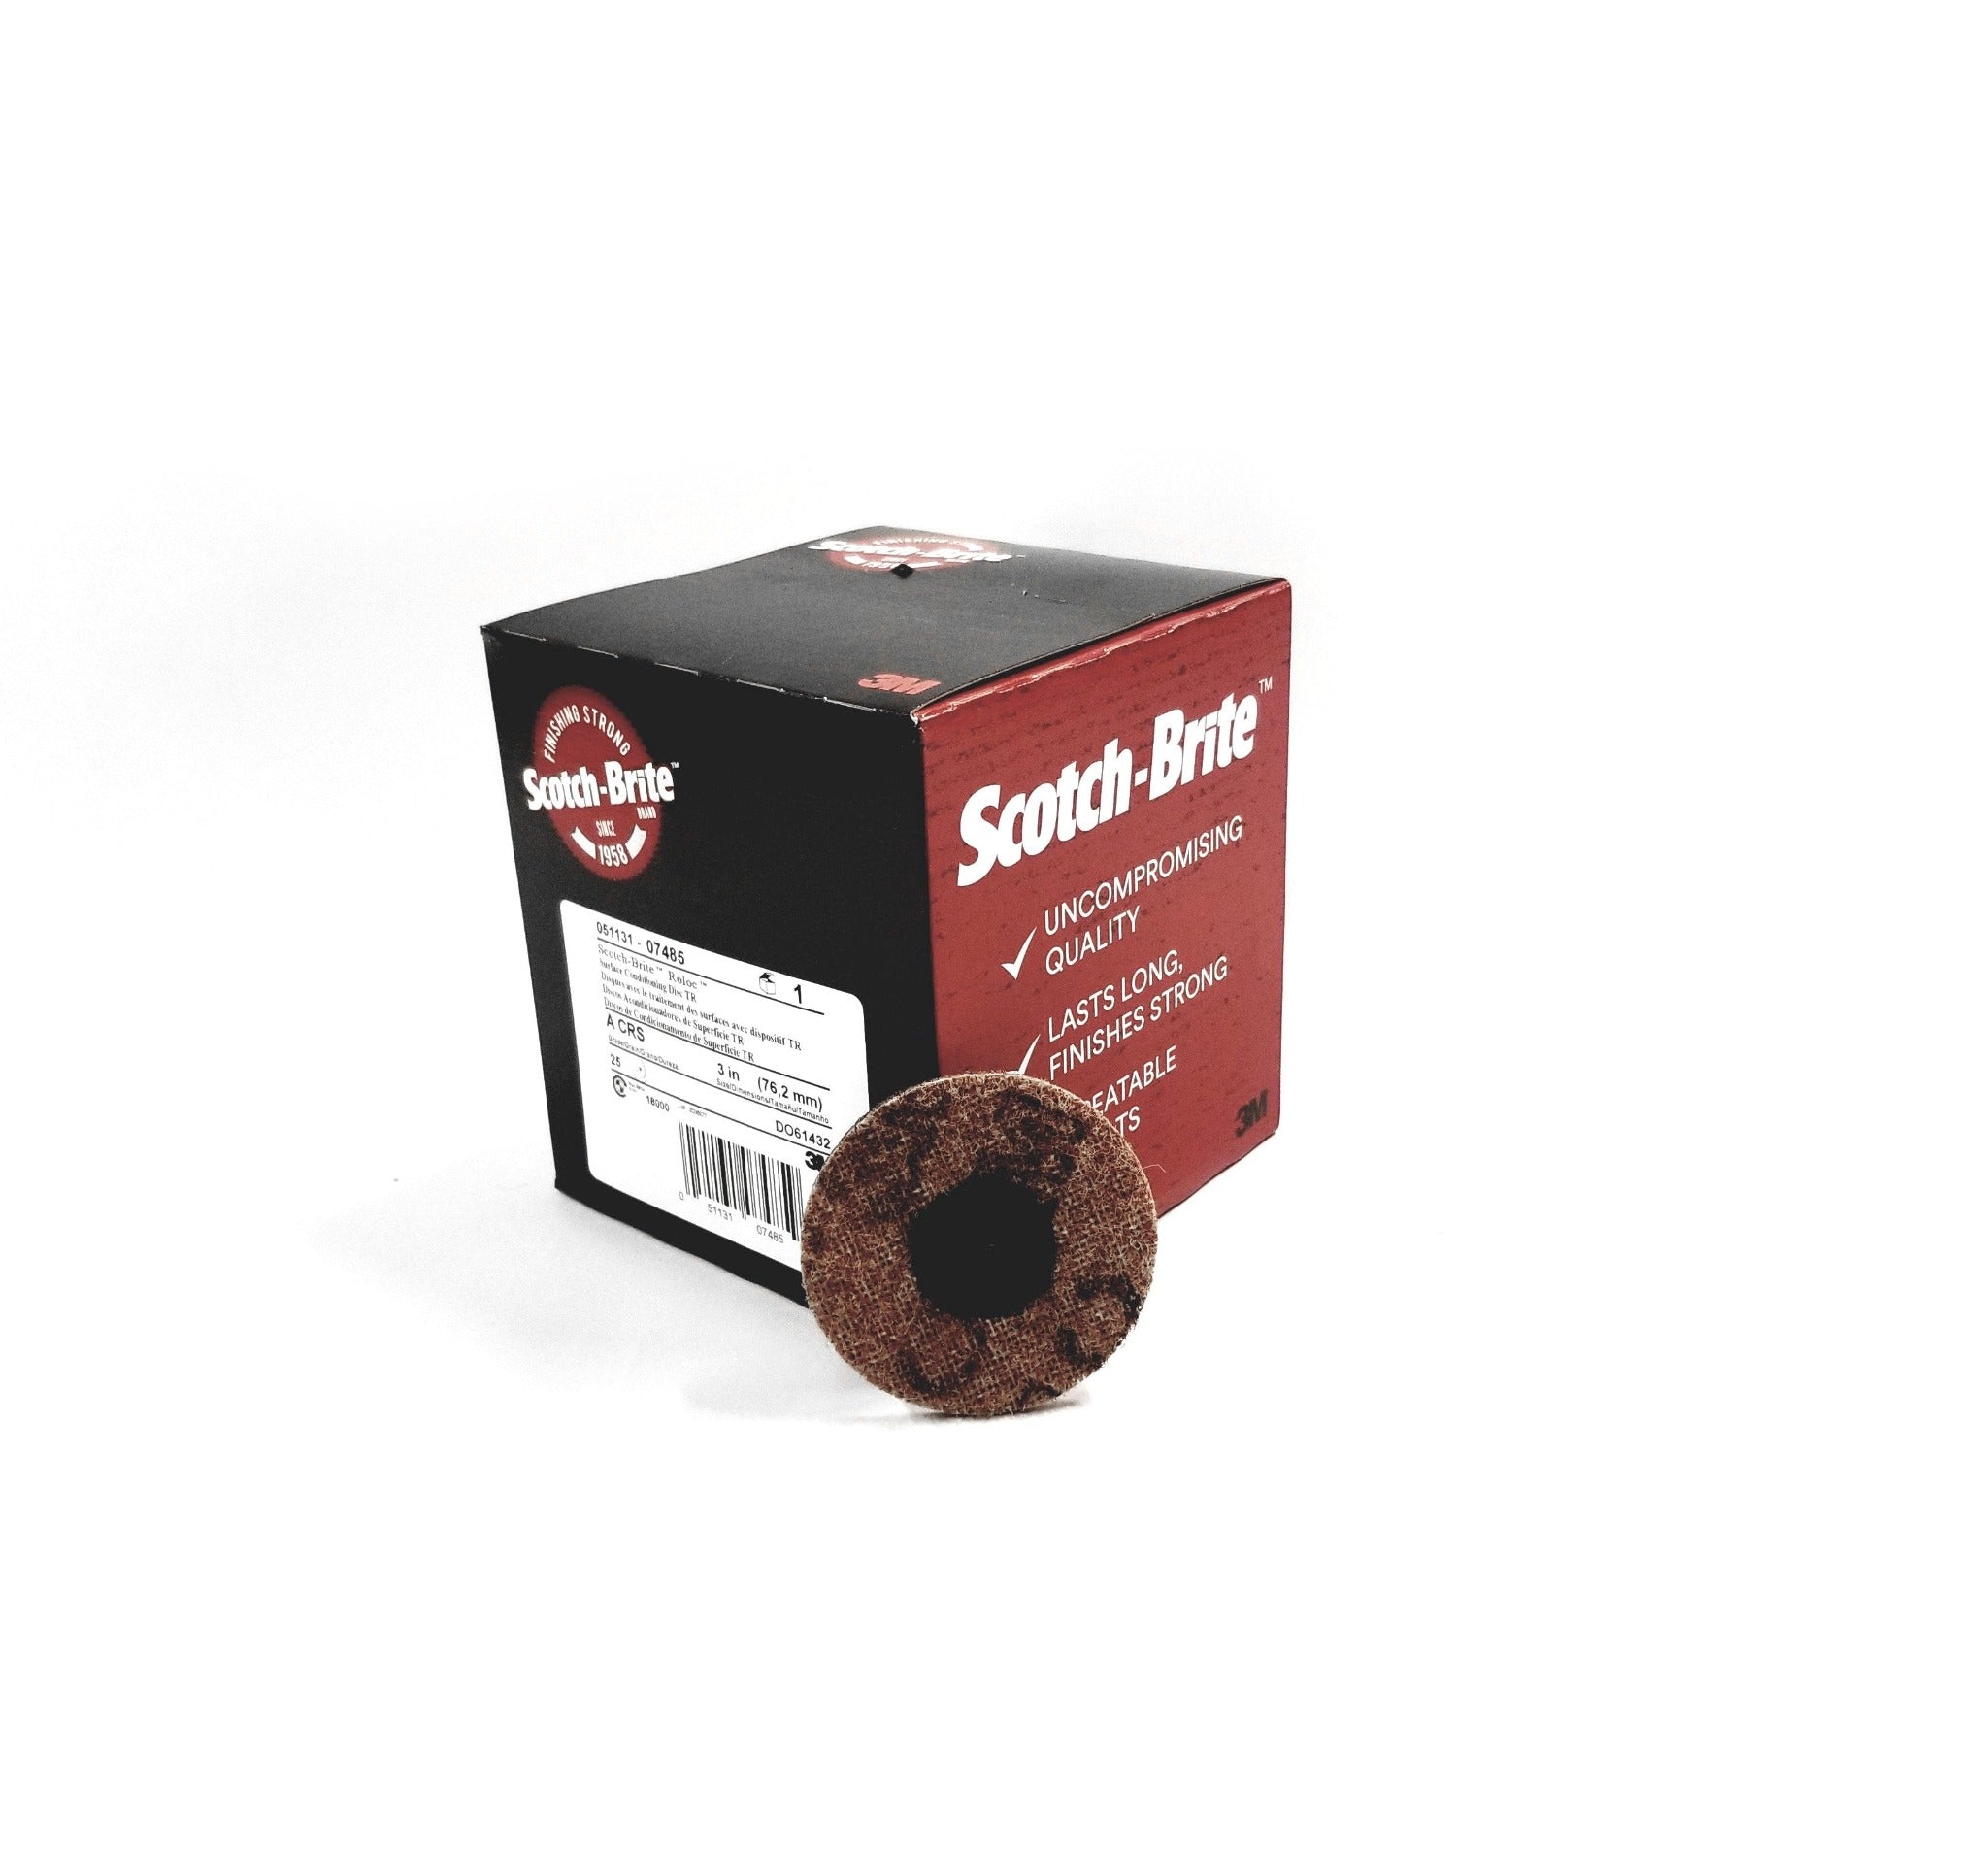 Scotch Brite Roloc 07485 Surface Conditioning Disc   Brown   Coarse   TR   3 in   25 per box